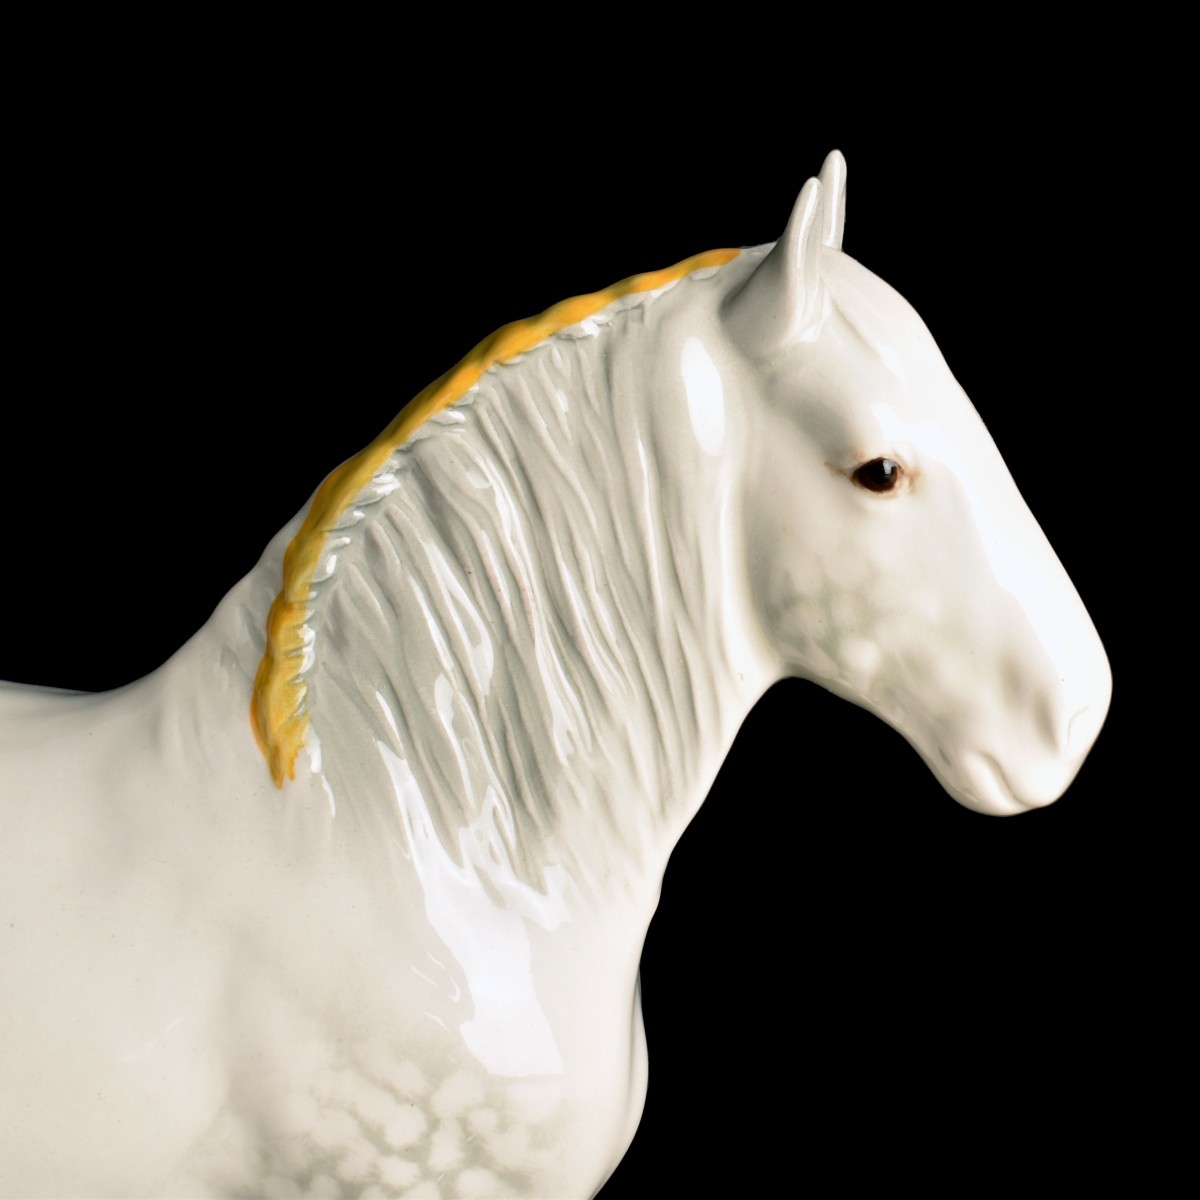 Beswick Porcelain Horse Figurines